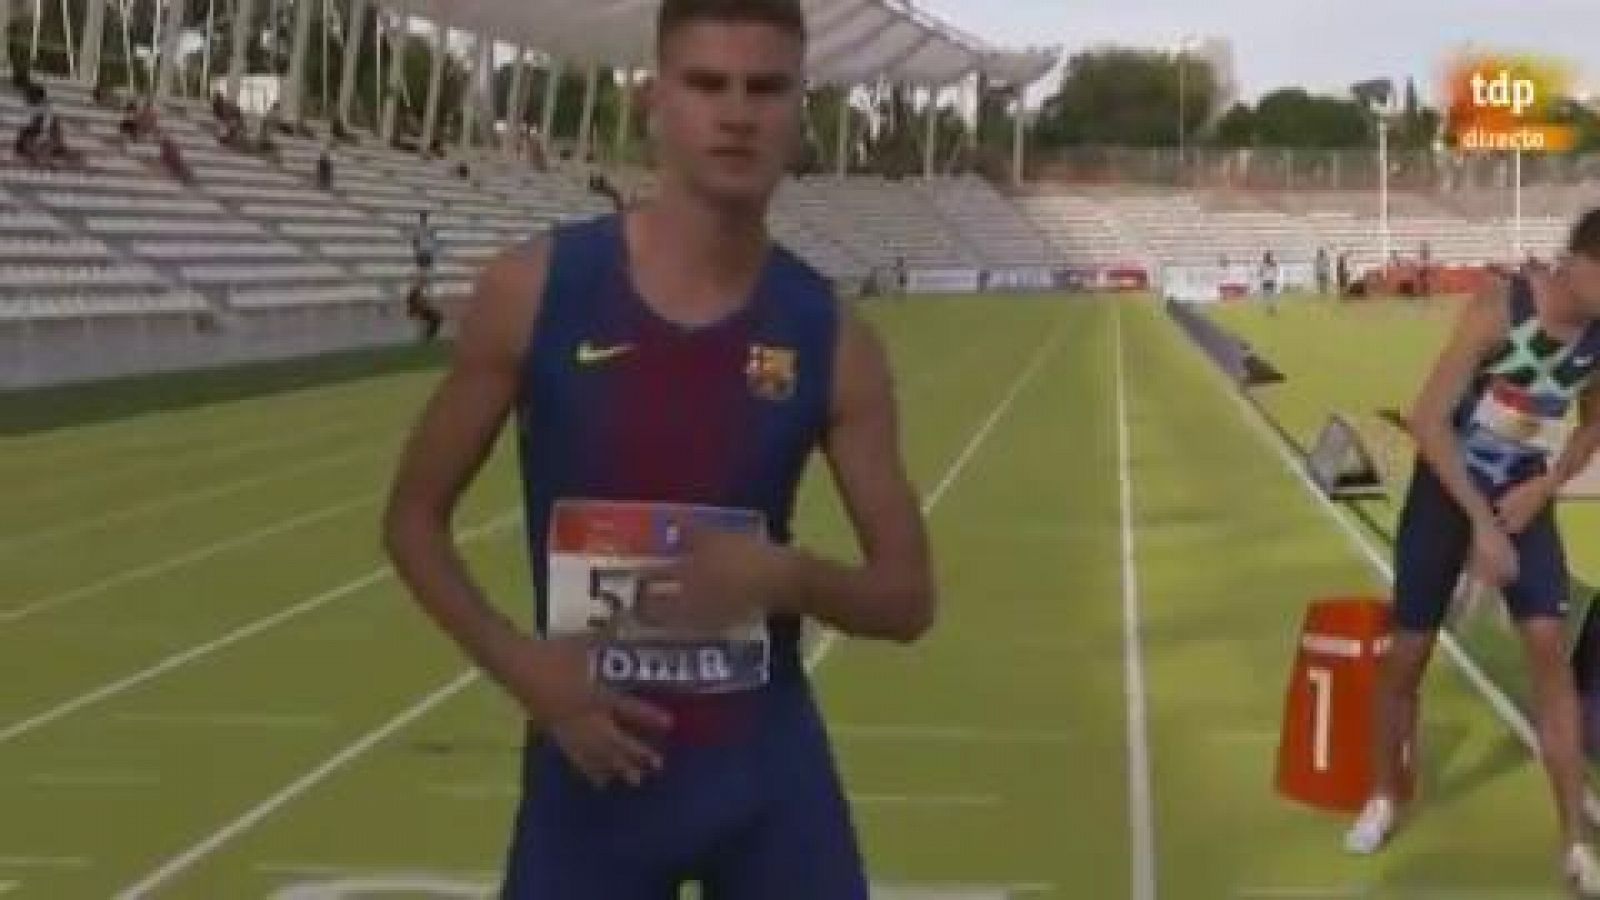 Atletismo | Mariano García, campeón de España de 800m